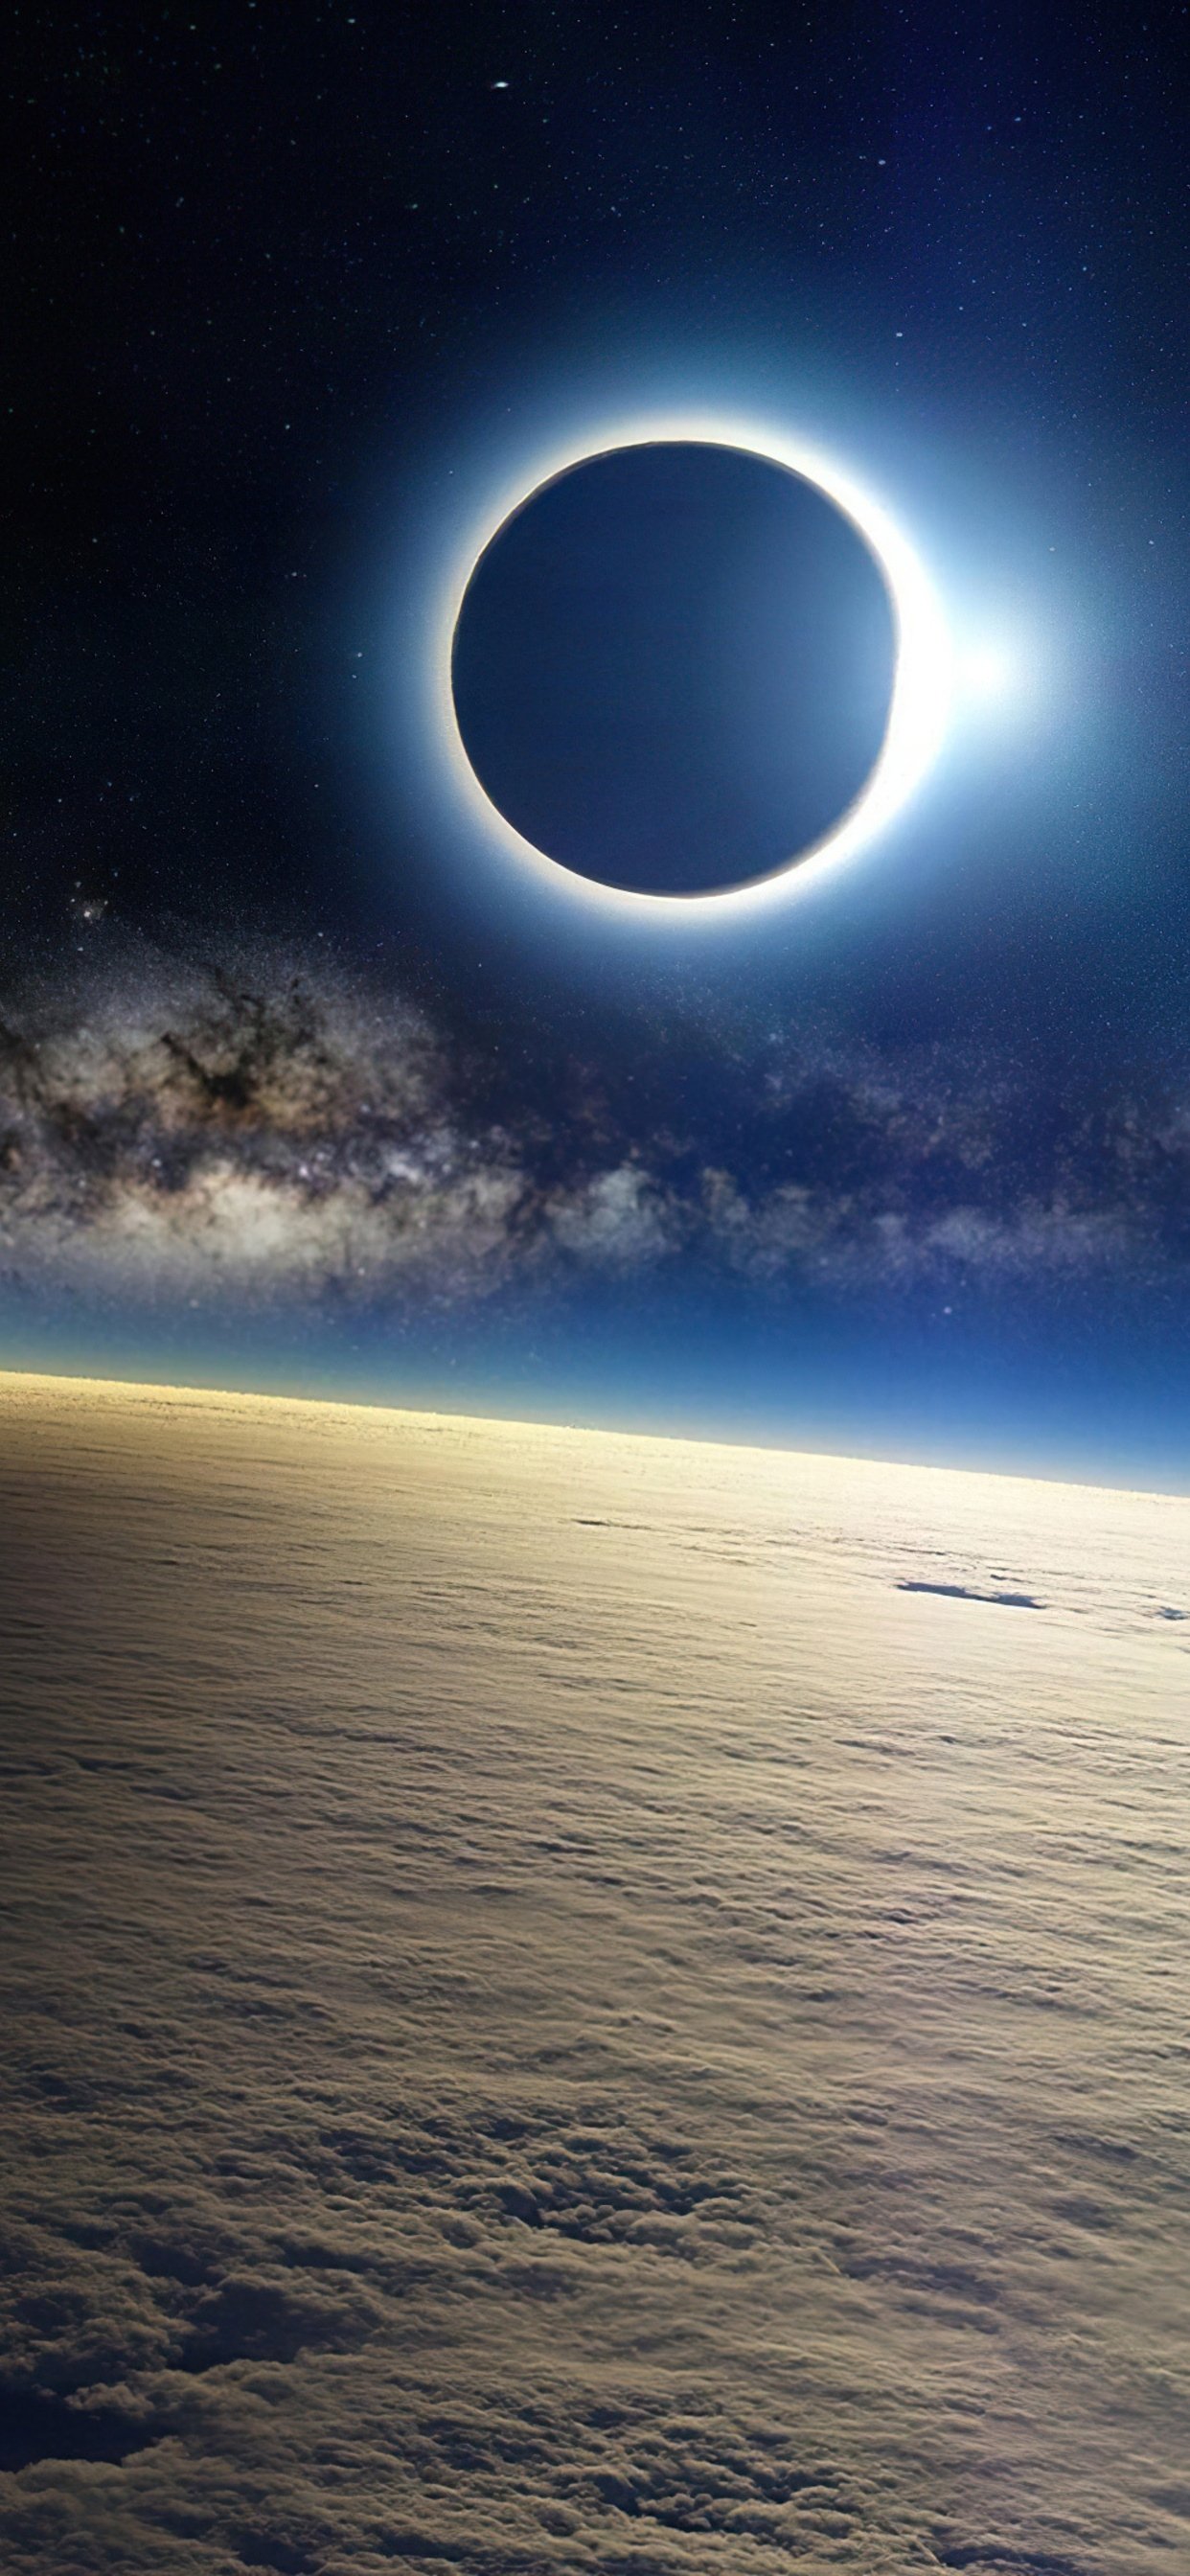 Galaxy solar eclipse Wallpaper Download